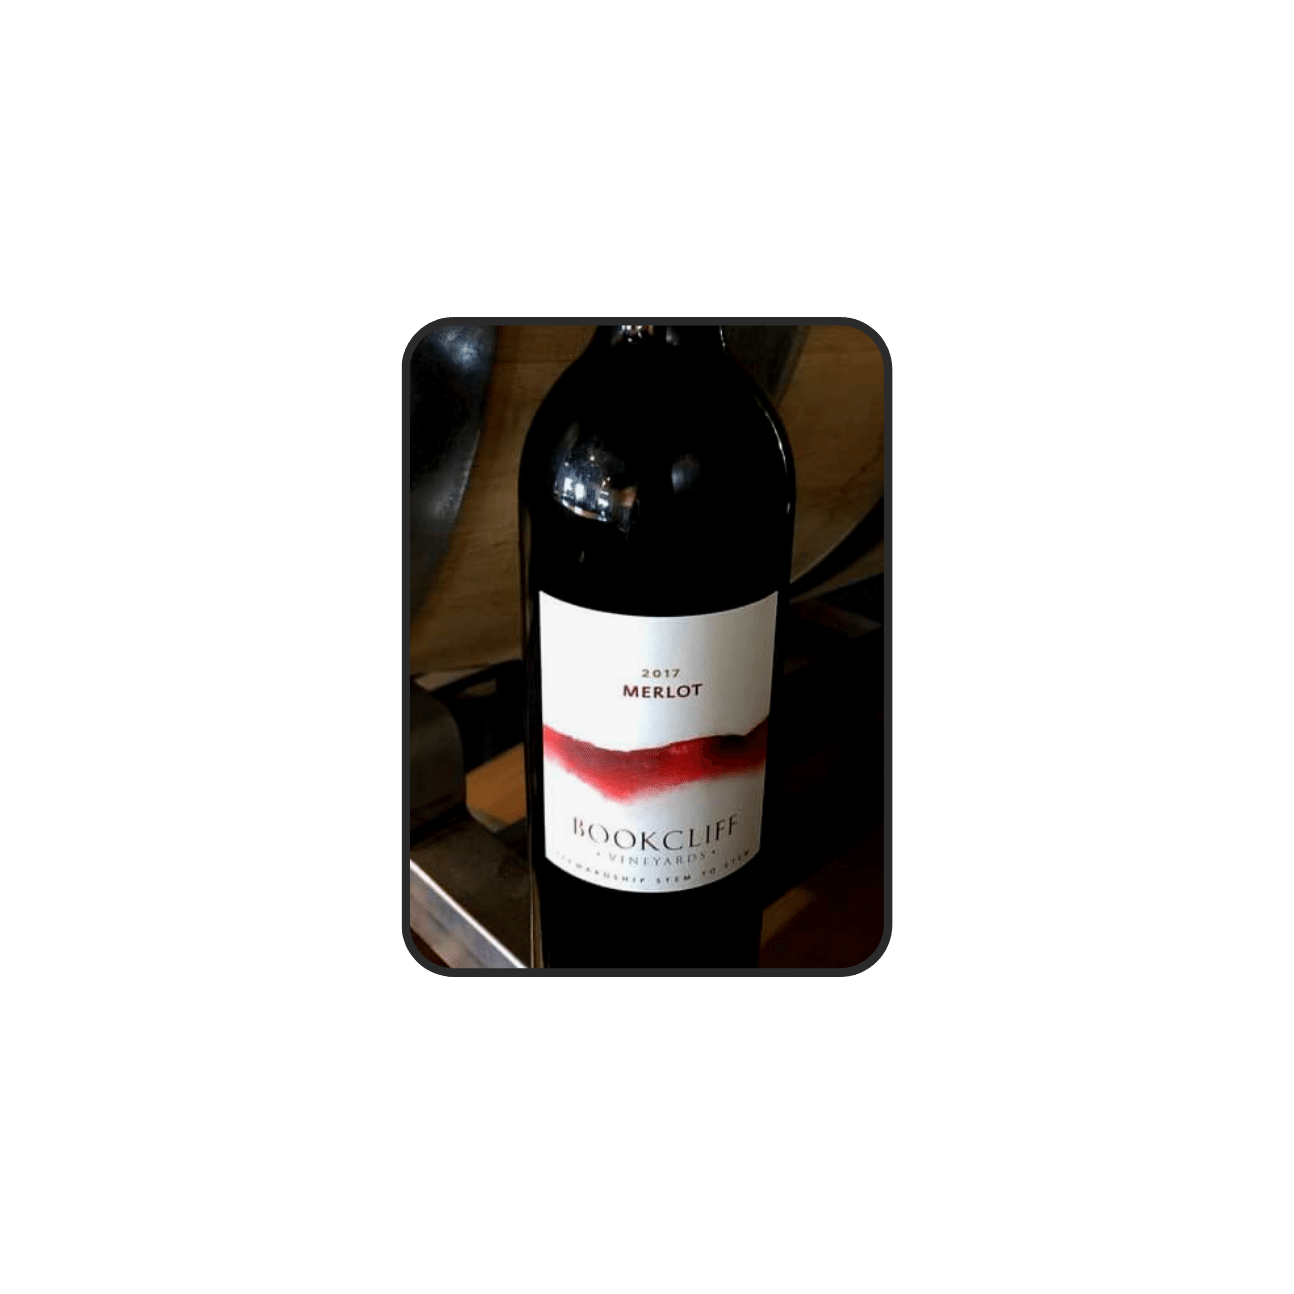 2017 Merlot (Bookcliff Vineyards)